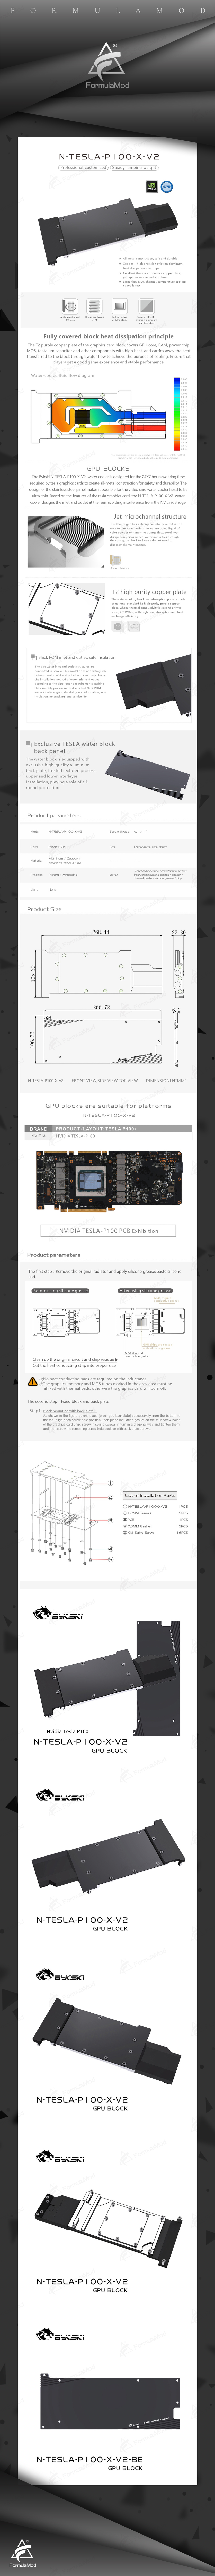 Bykski GPU Block For Nvidia Tesla P100, High Heat Resistance Material POM + Full Metal Construction, With Backplate Full Cover GPU Water Cooling Cooler Radiator Block N-TESLA-P100-X-V2  